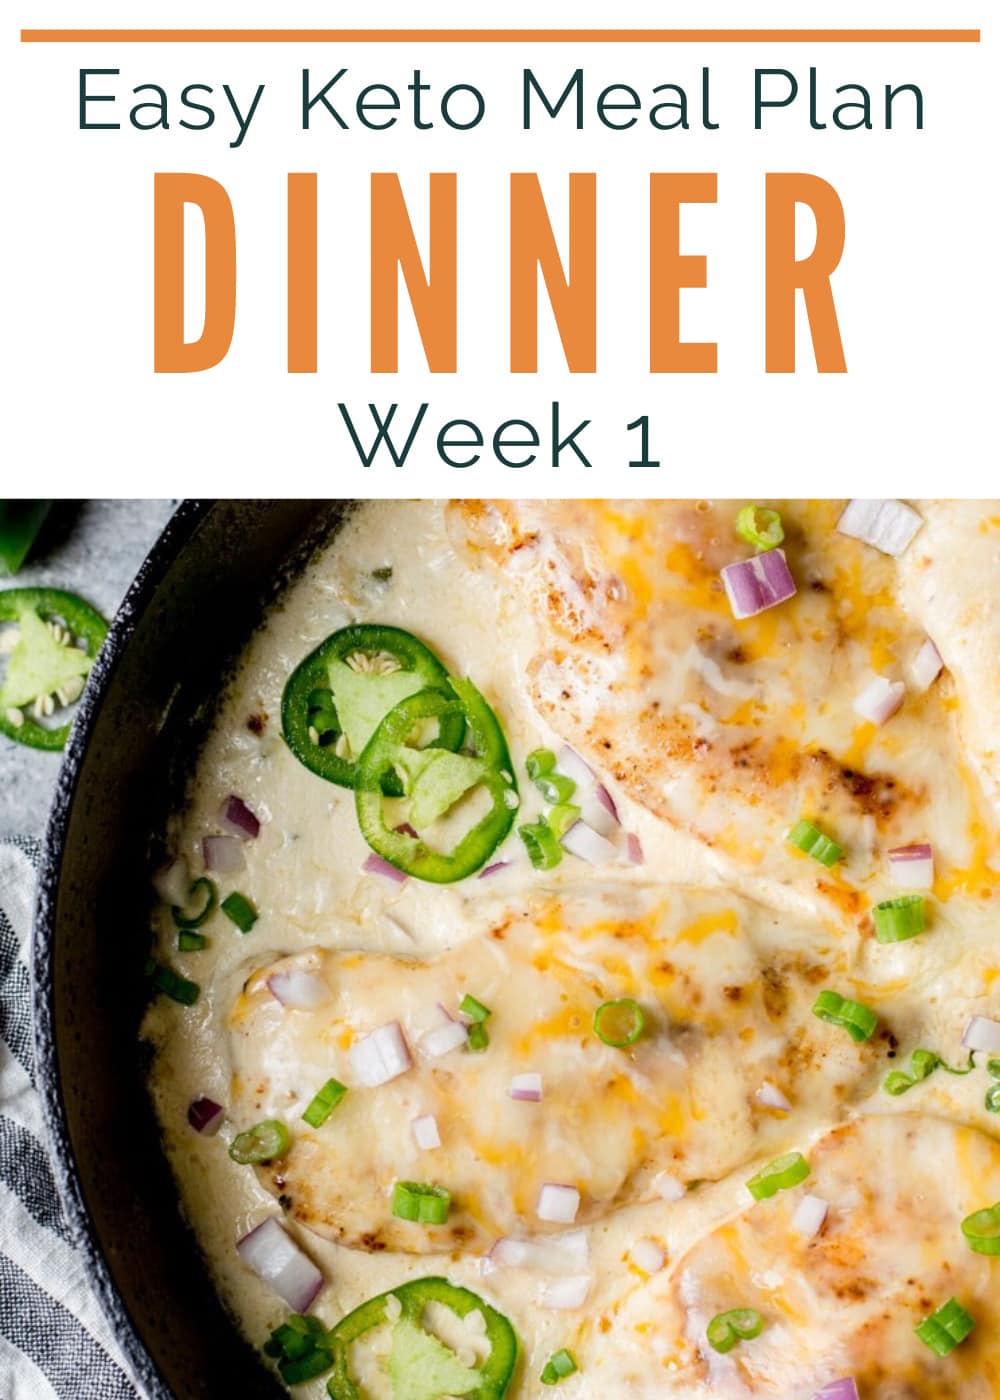 https://thebestketorecipes.com/wp-content/uploads/2020/01/Wk-1-Meal-Plan-Dinner-1.jpg